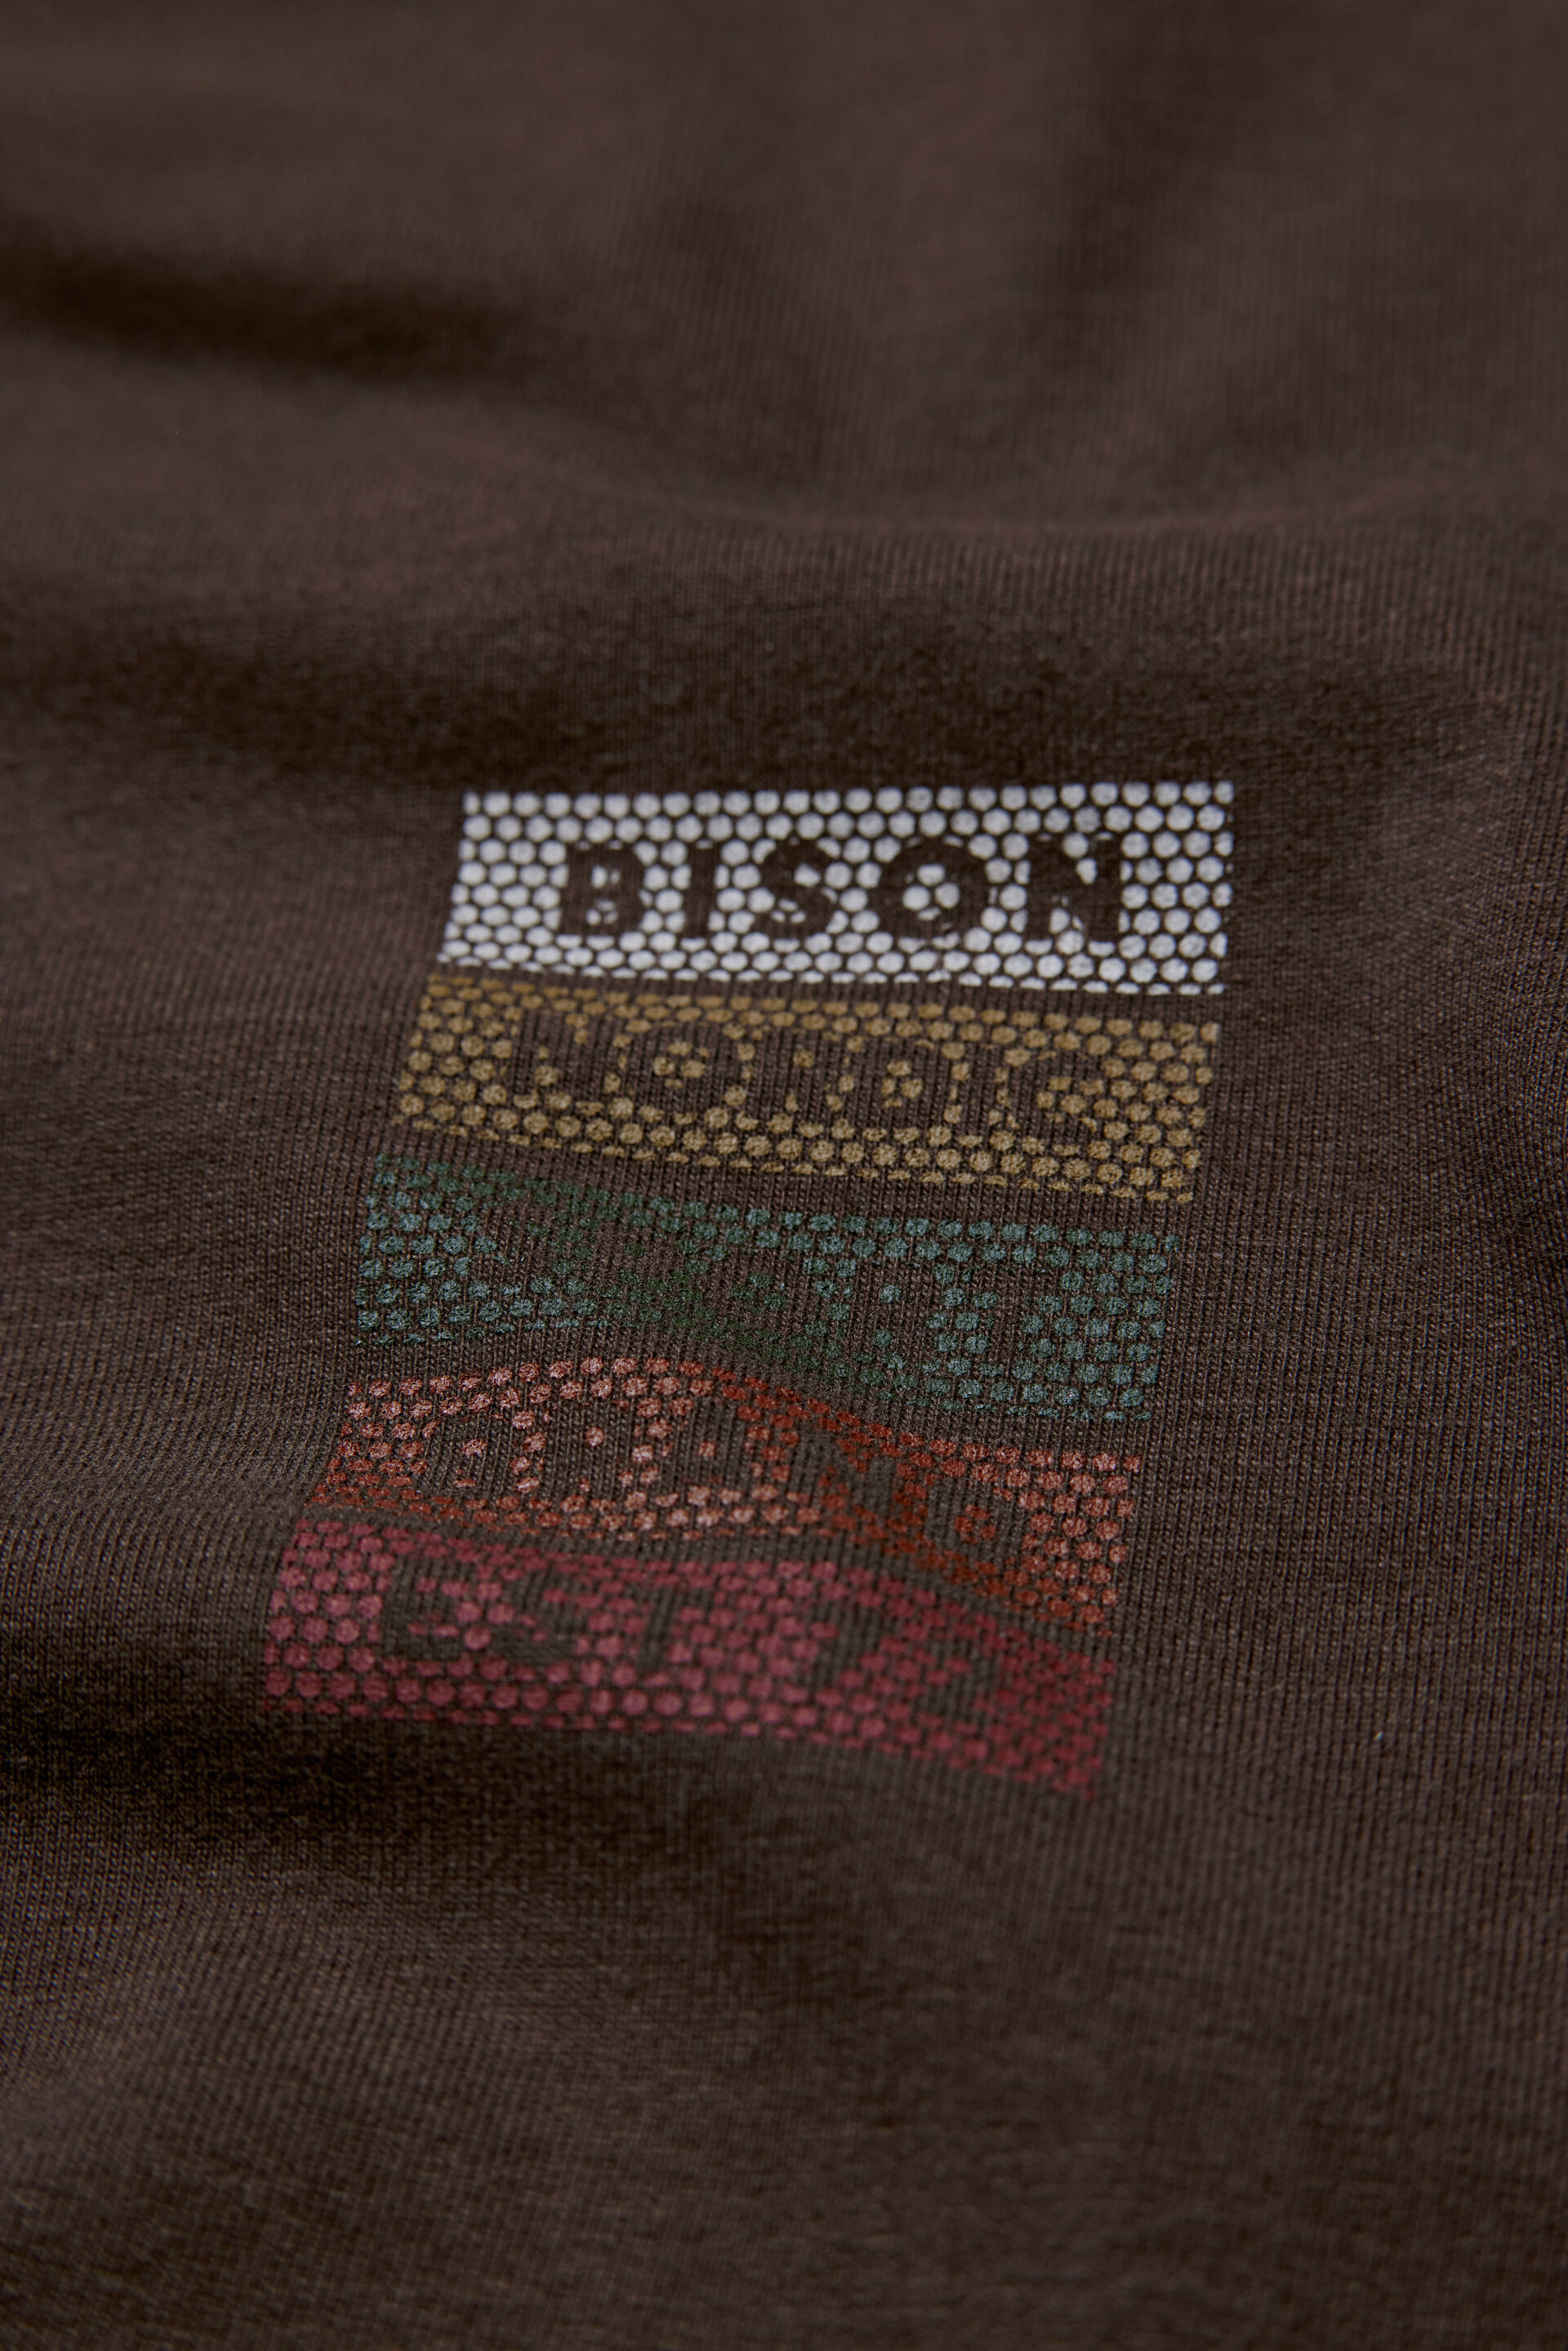 Bison  T-shirt 80-400102